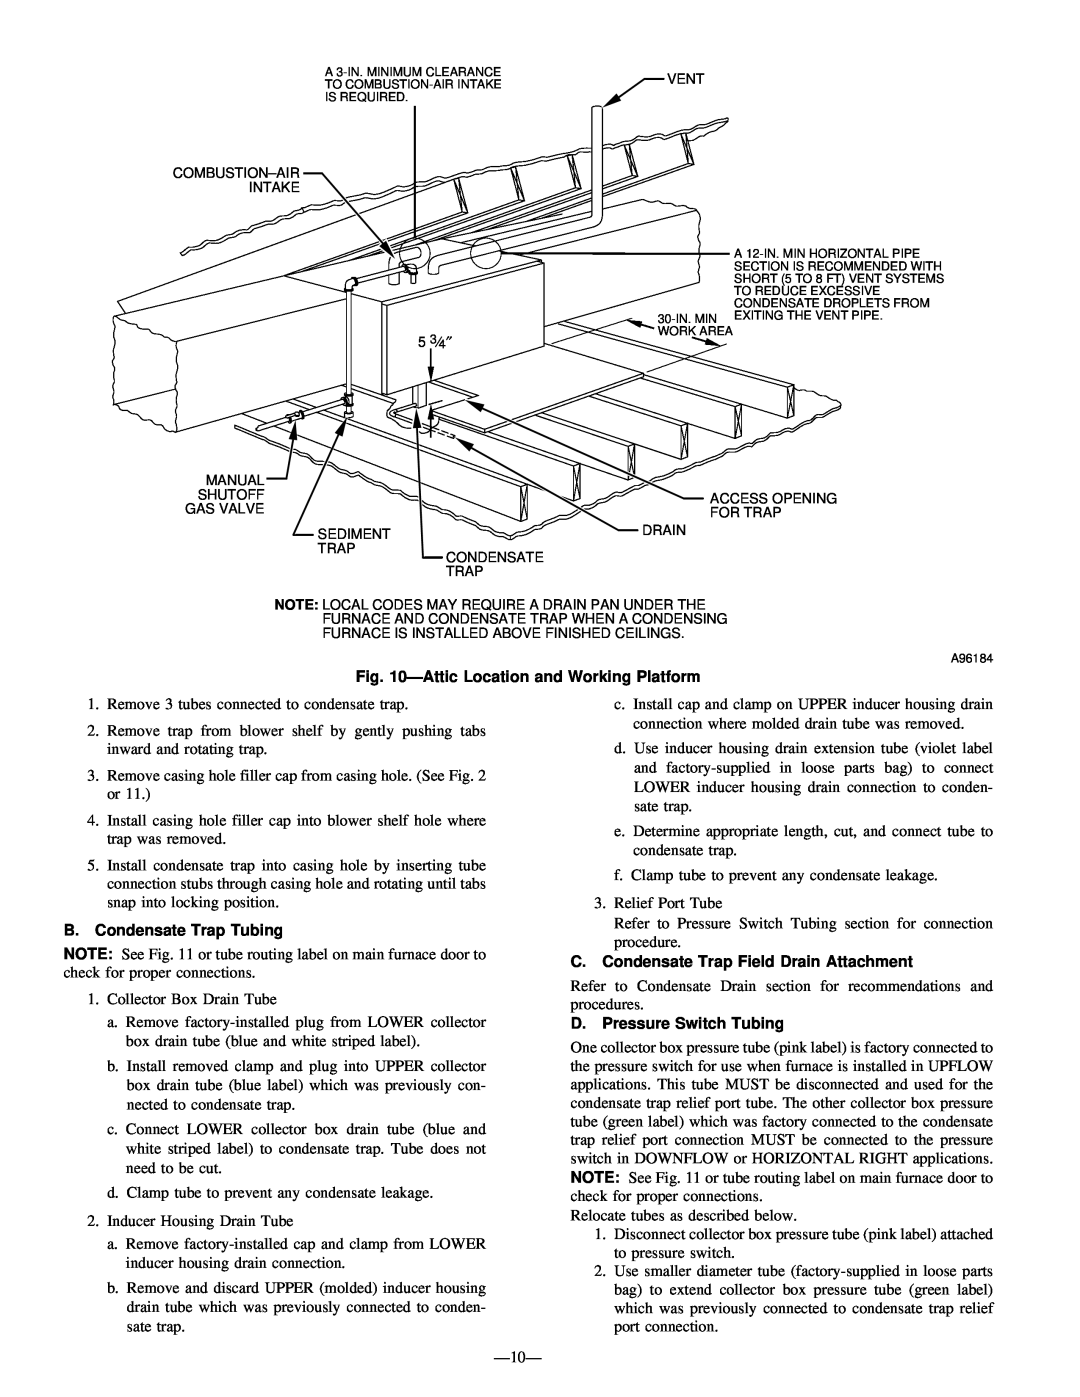 Bryant 345MAV instruction manual ÐAttic Location and Working Platform, D. Pressure Switch Tubing, B.Condensate Trap Tubing 